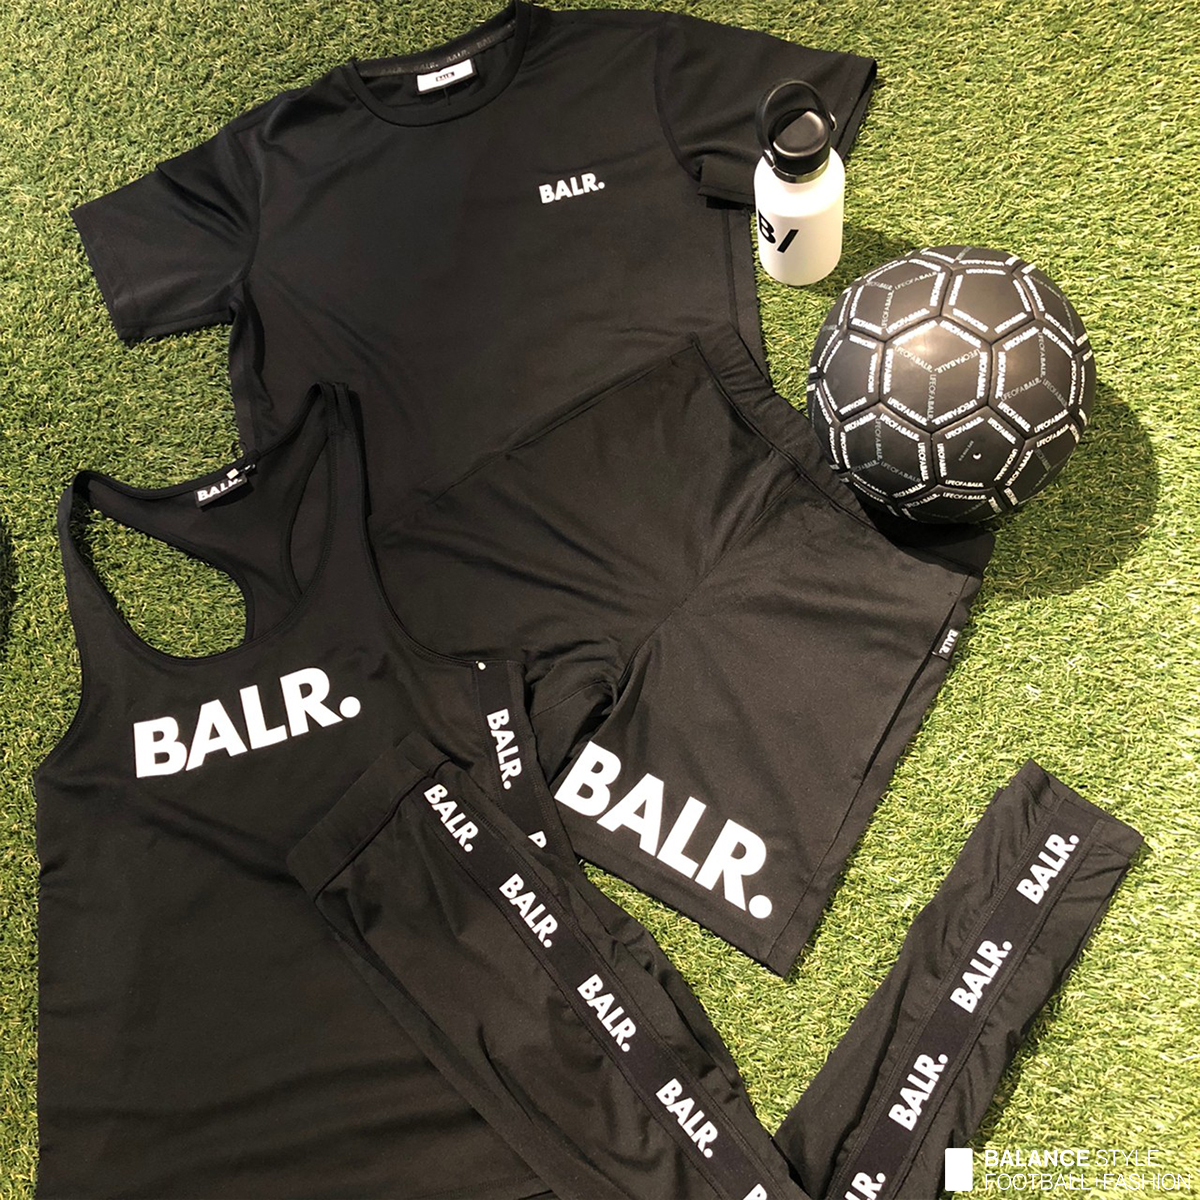 Balr デザインも機能もクールに決まる F Series で 最高のパフォーマンスを発揮 バランスタイムズ サッカー のあるファッションライフ